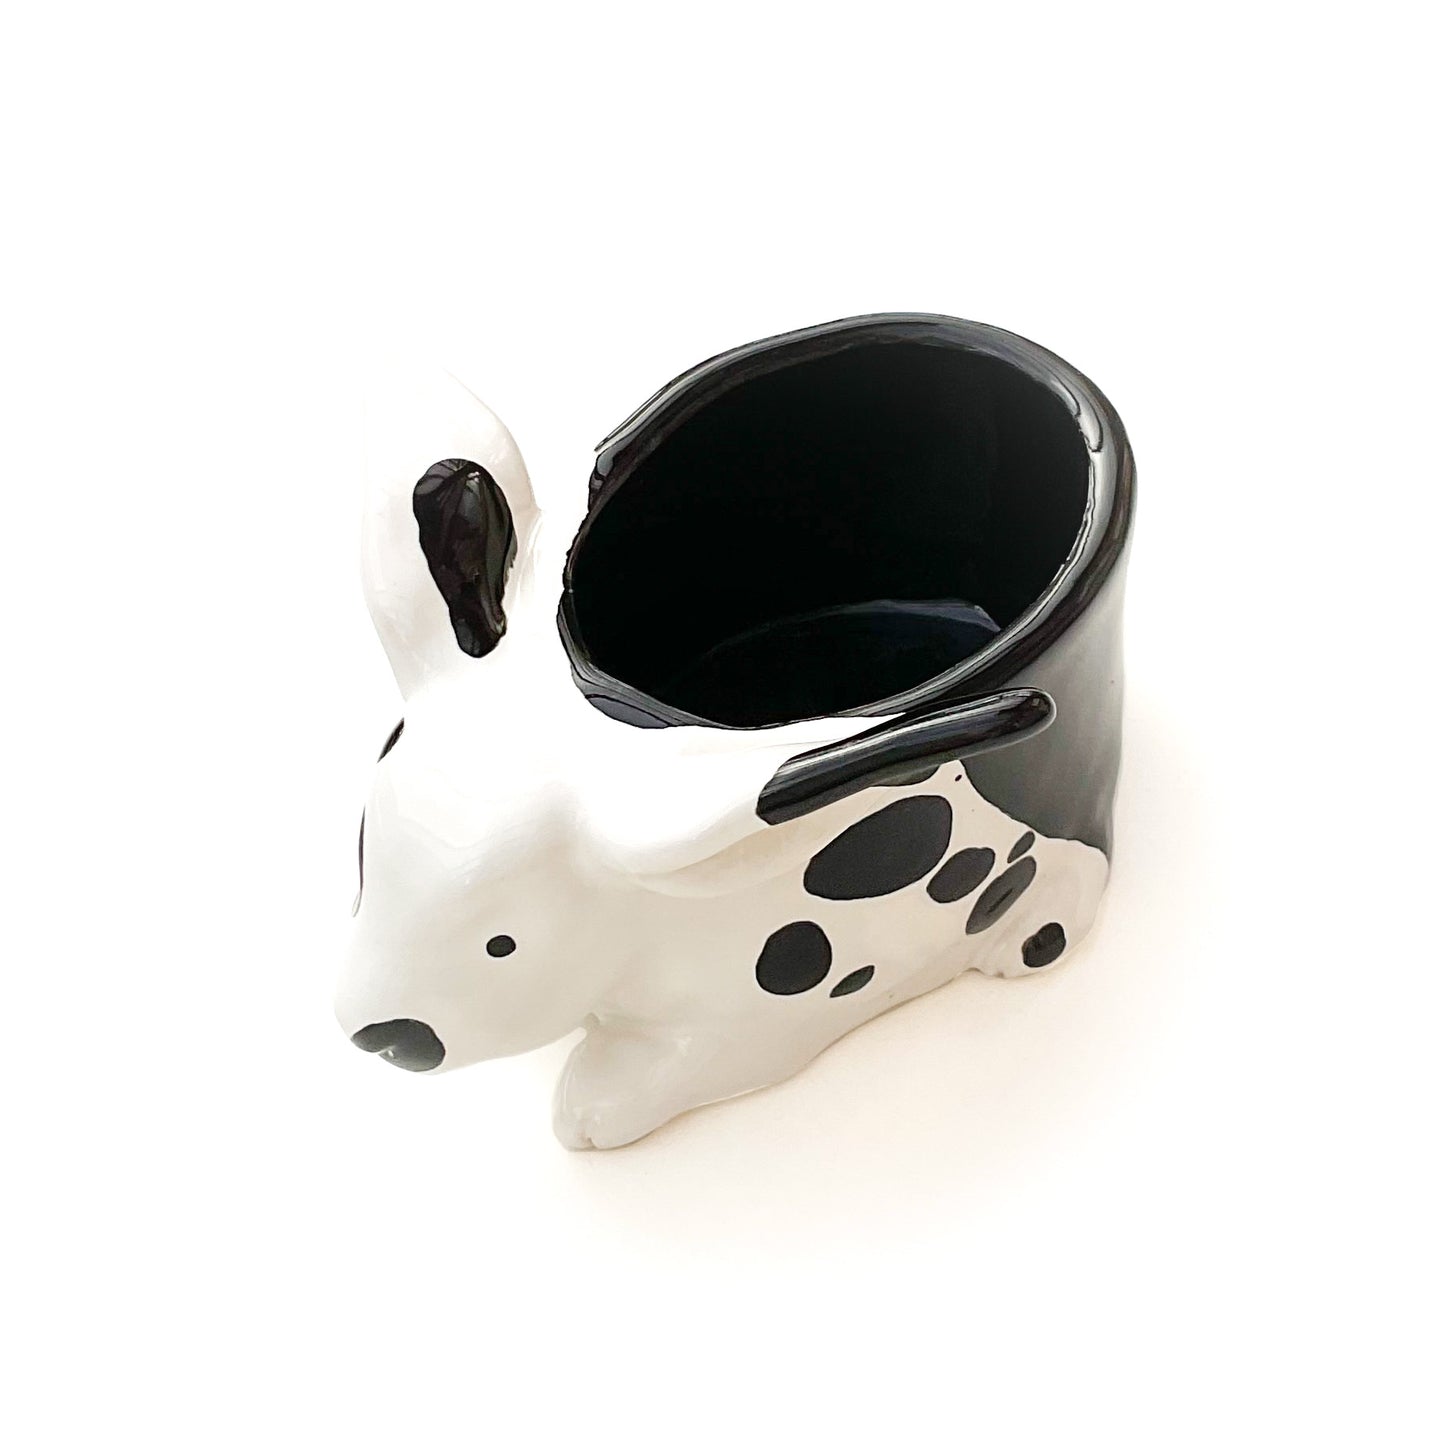 Holland Lop Eared Bunny Pot - Ceramic Bunny Planter